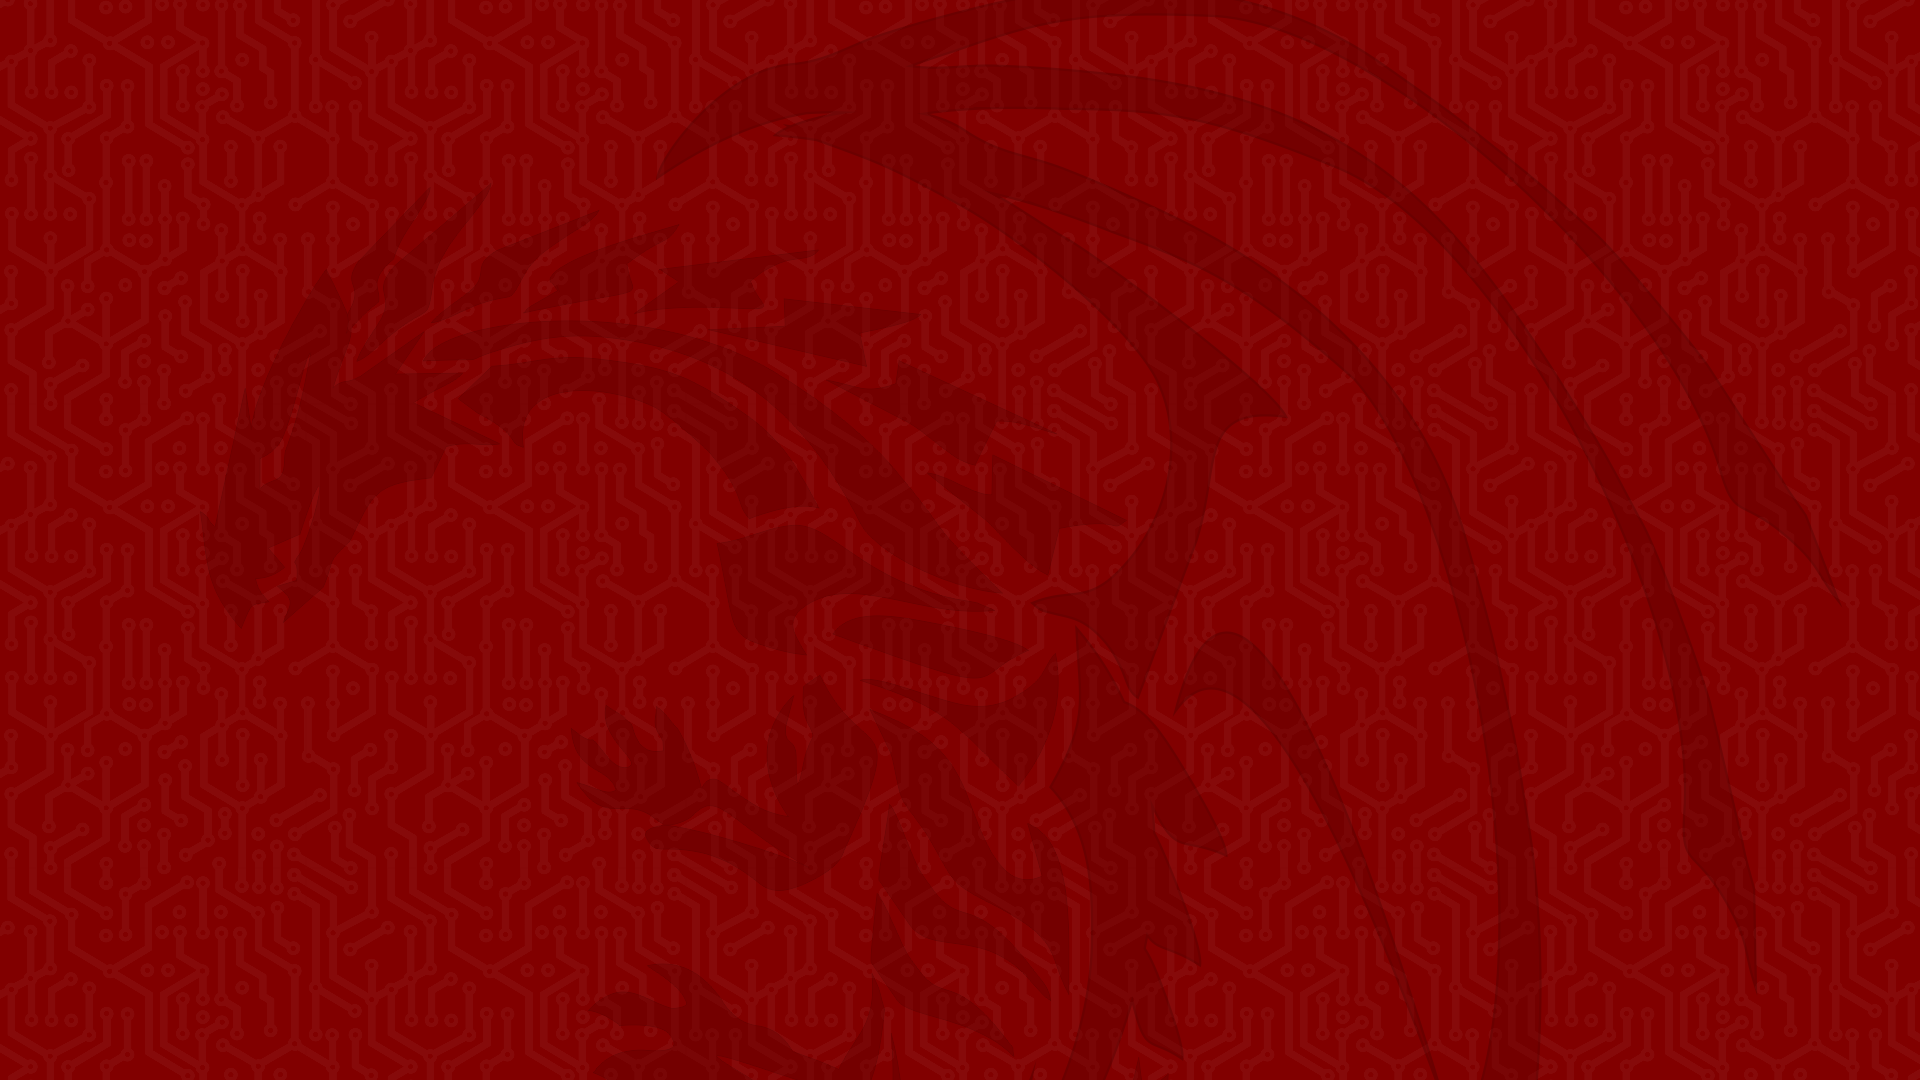 General 1920x1080 dragon red minimalism red background fantasy art creature digital art